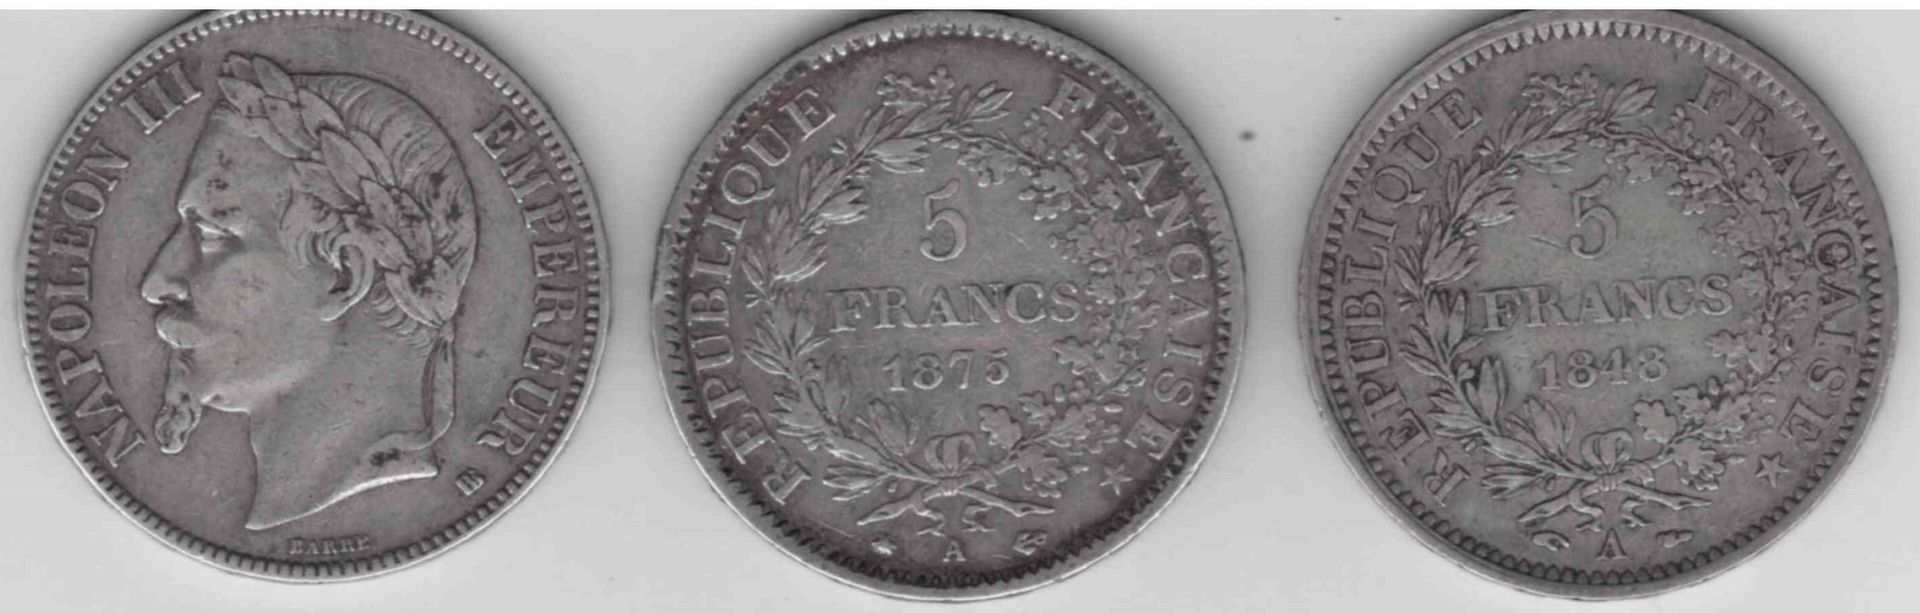 Null (数量) 一套3枚法国5法郎银币：1.海格力斯二世共和国1848年，铸币A，2.拿破仑三世头顶月桂冠1869年，铸币BB，3.海格力斯三世共和国187&hellip;